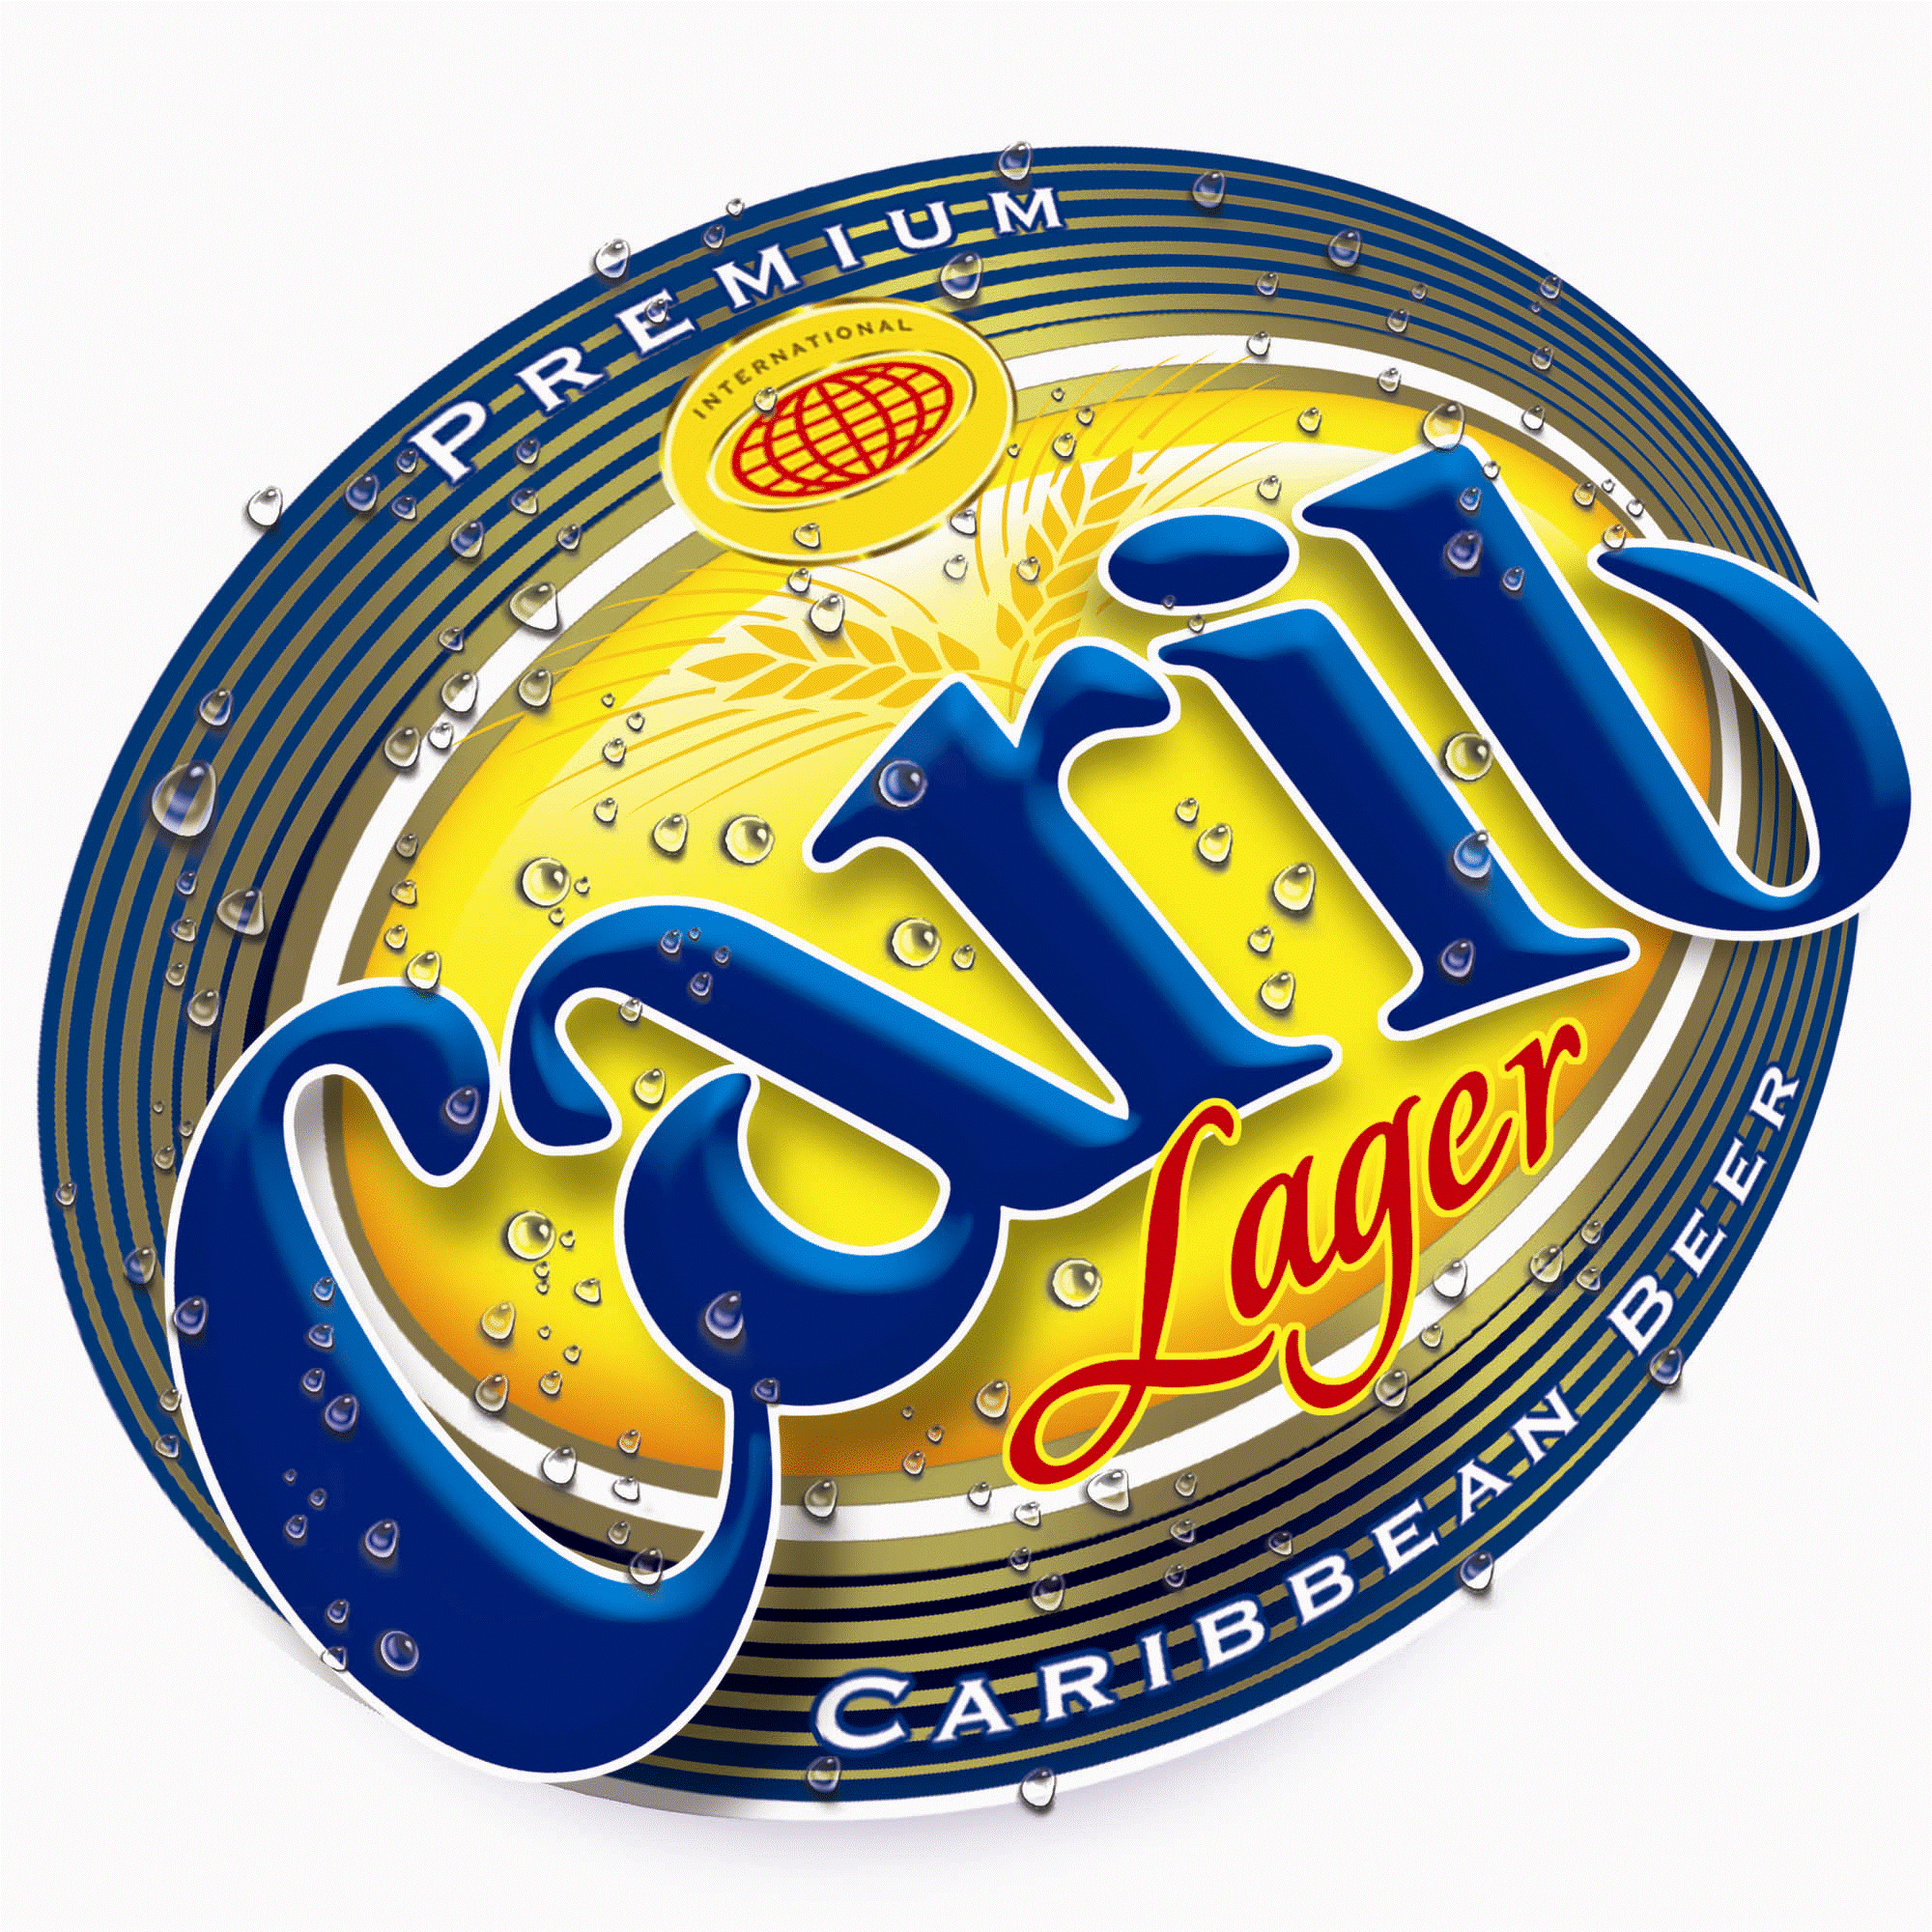 Carib beer  Logos 